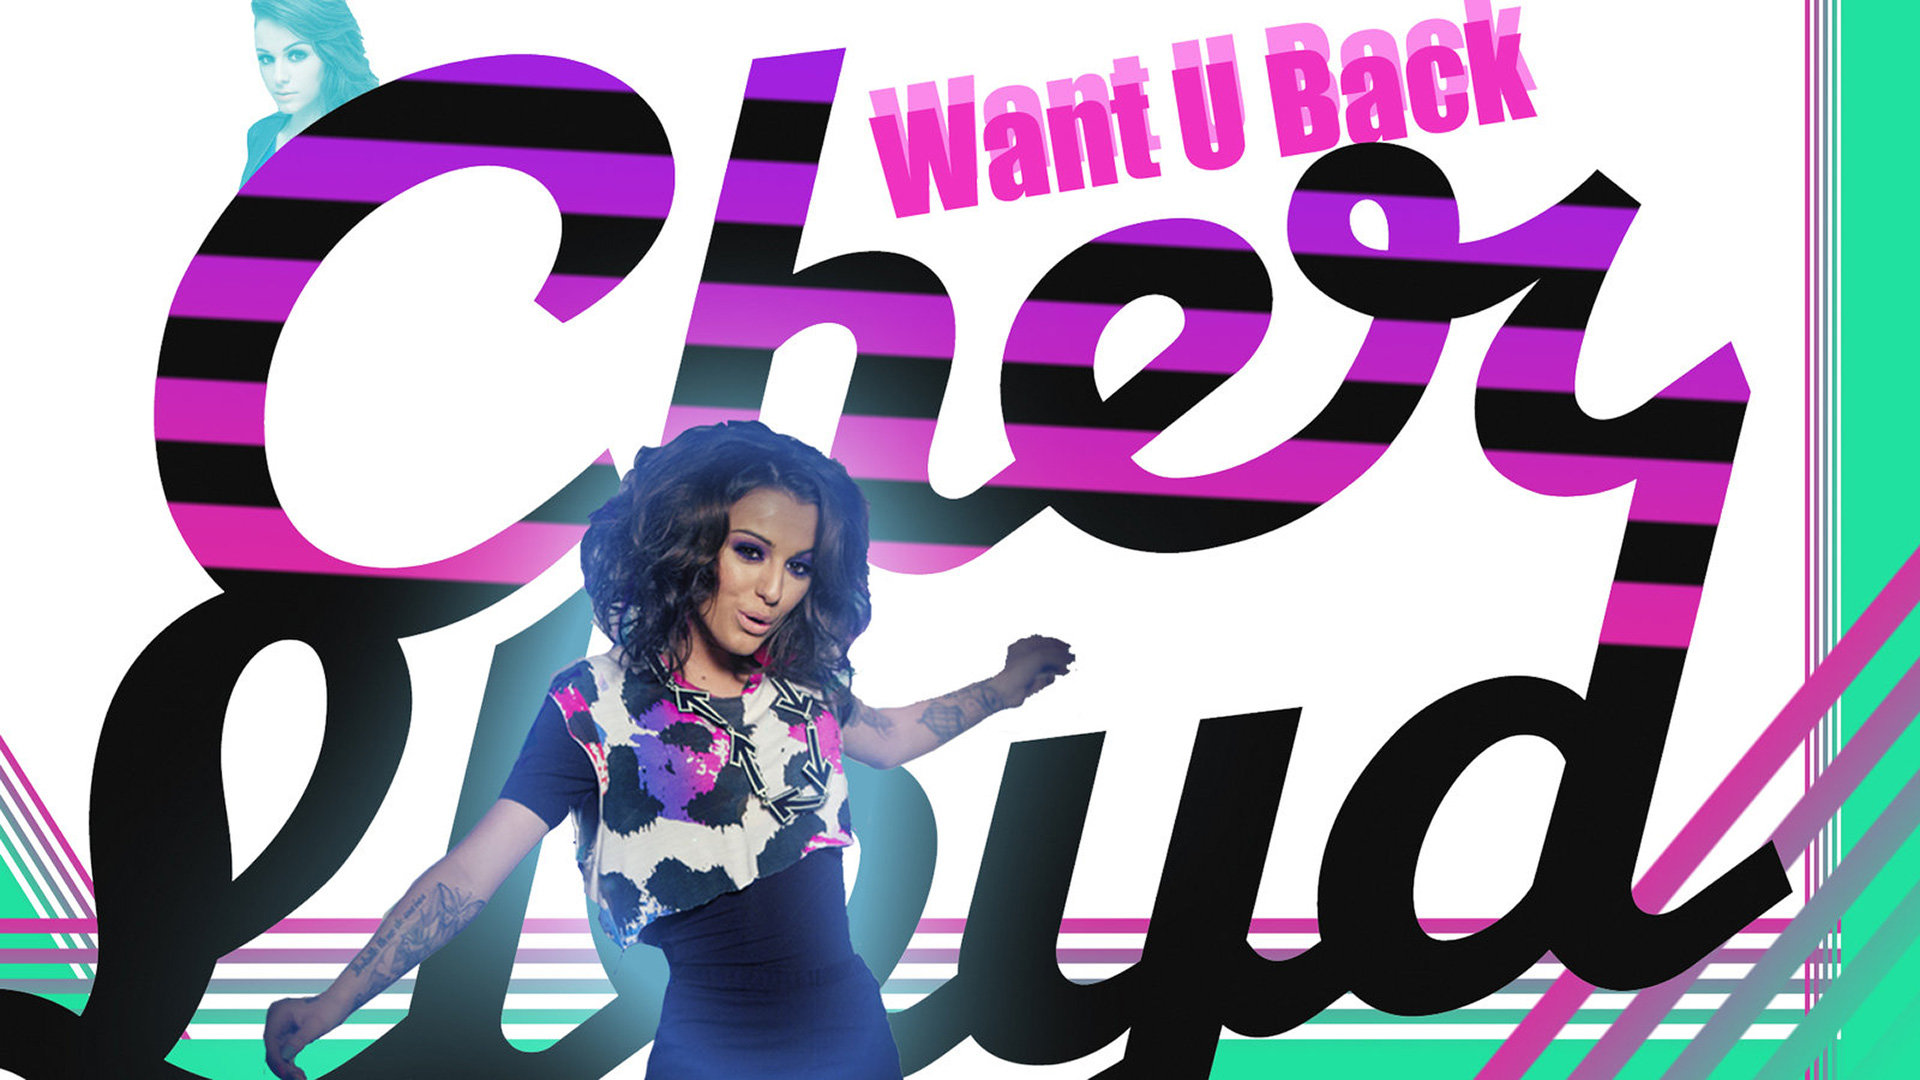 Free download Cher Lloyd wallpaper ID:26126 full hd 1080p for desktop